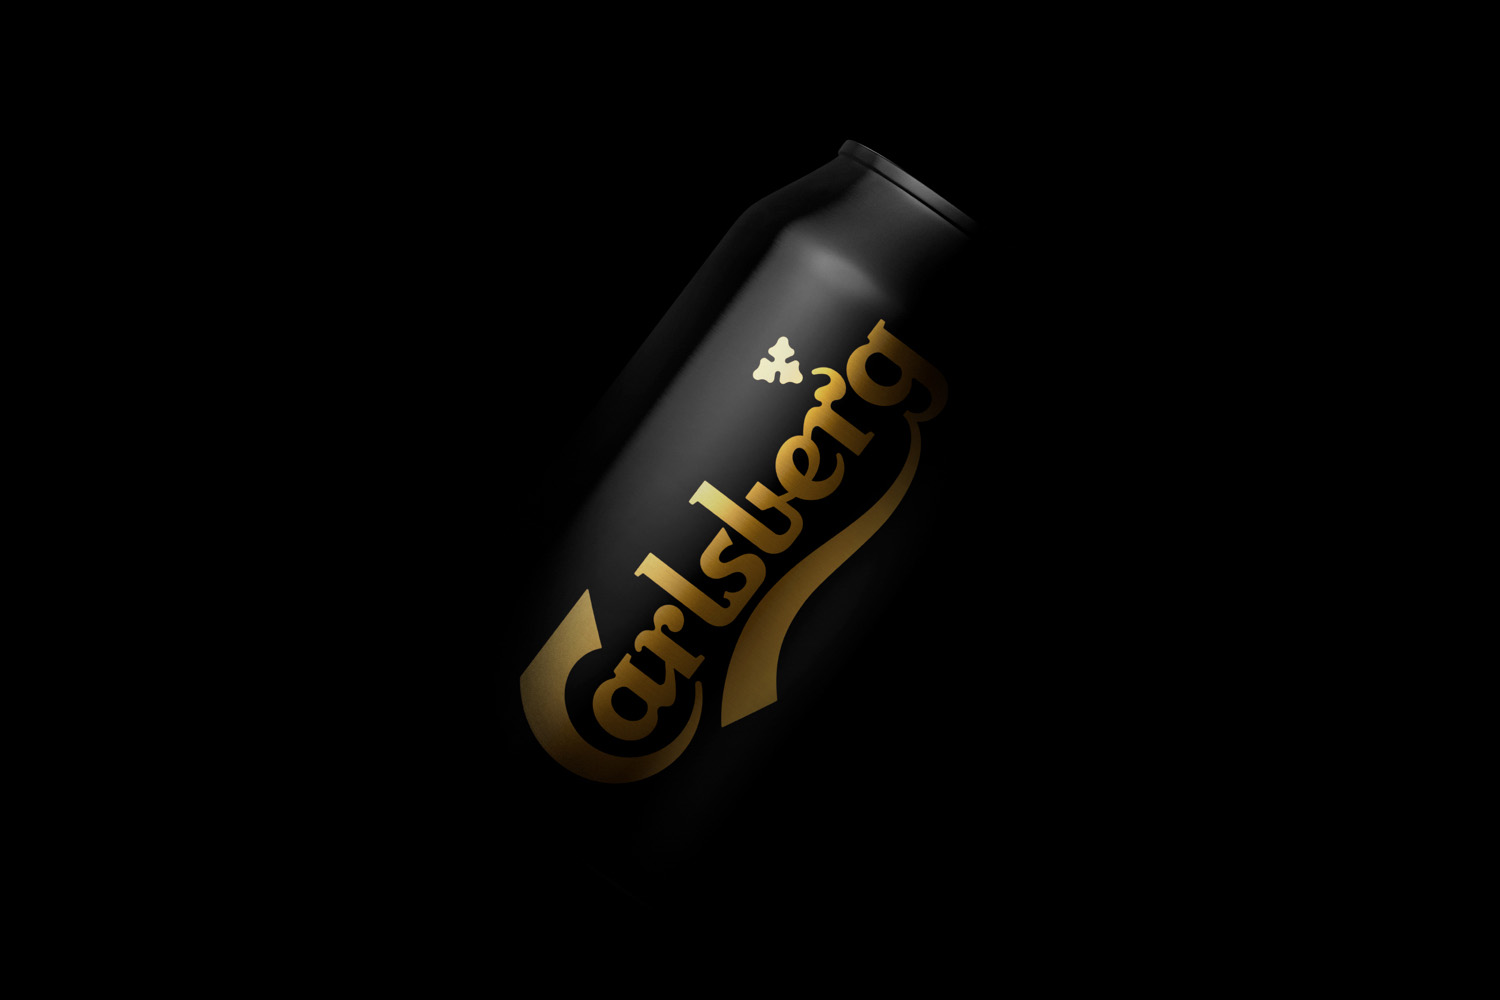 New minimal packaging design by Danish studio Kontrapunkt for Carlsberg's Black Gold